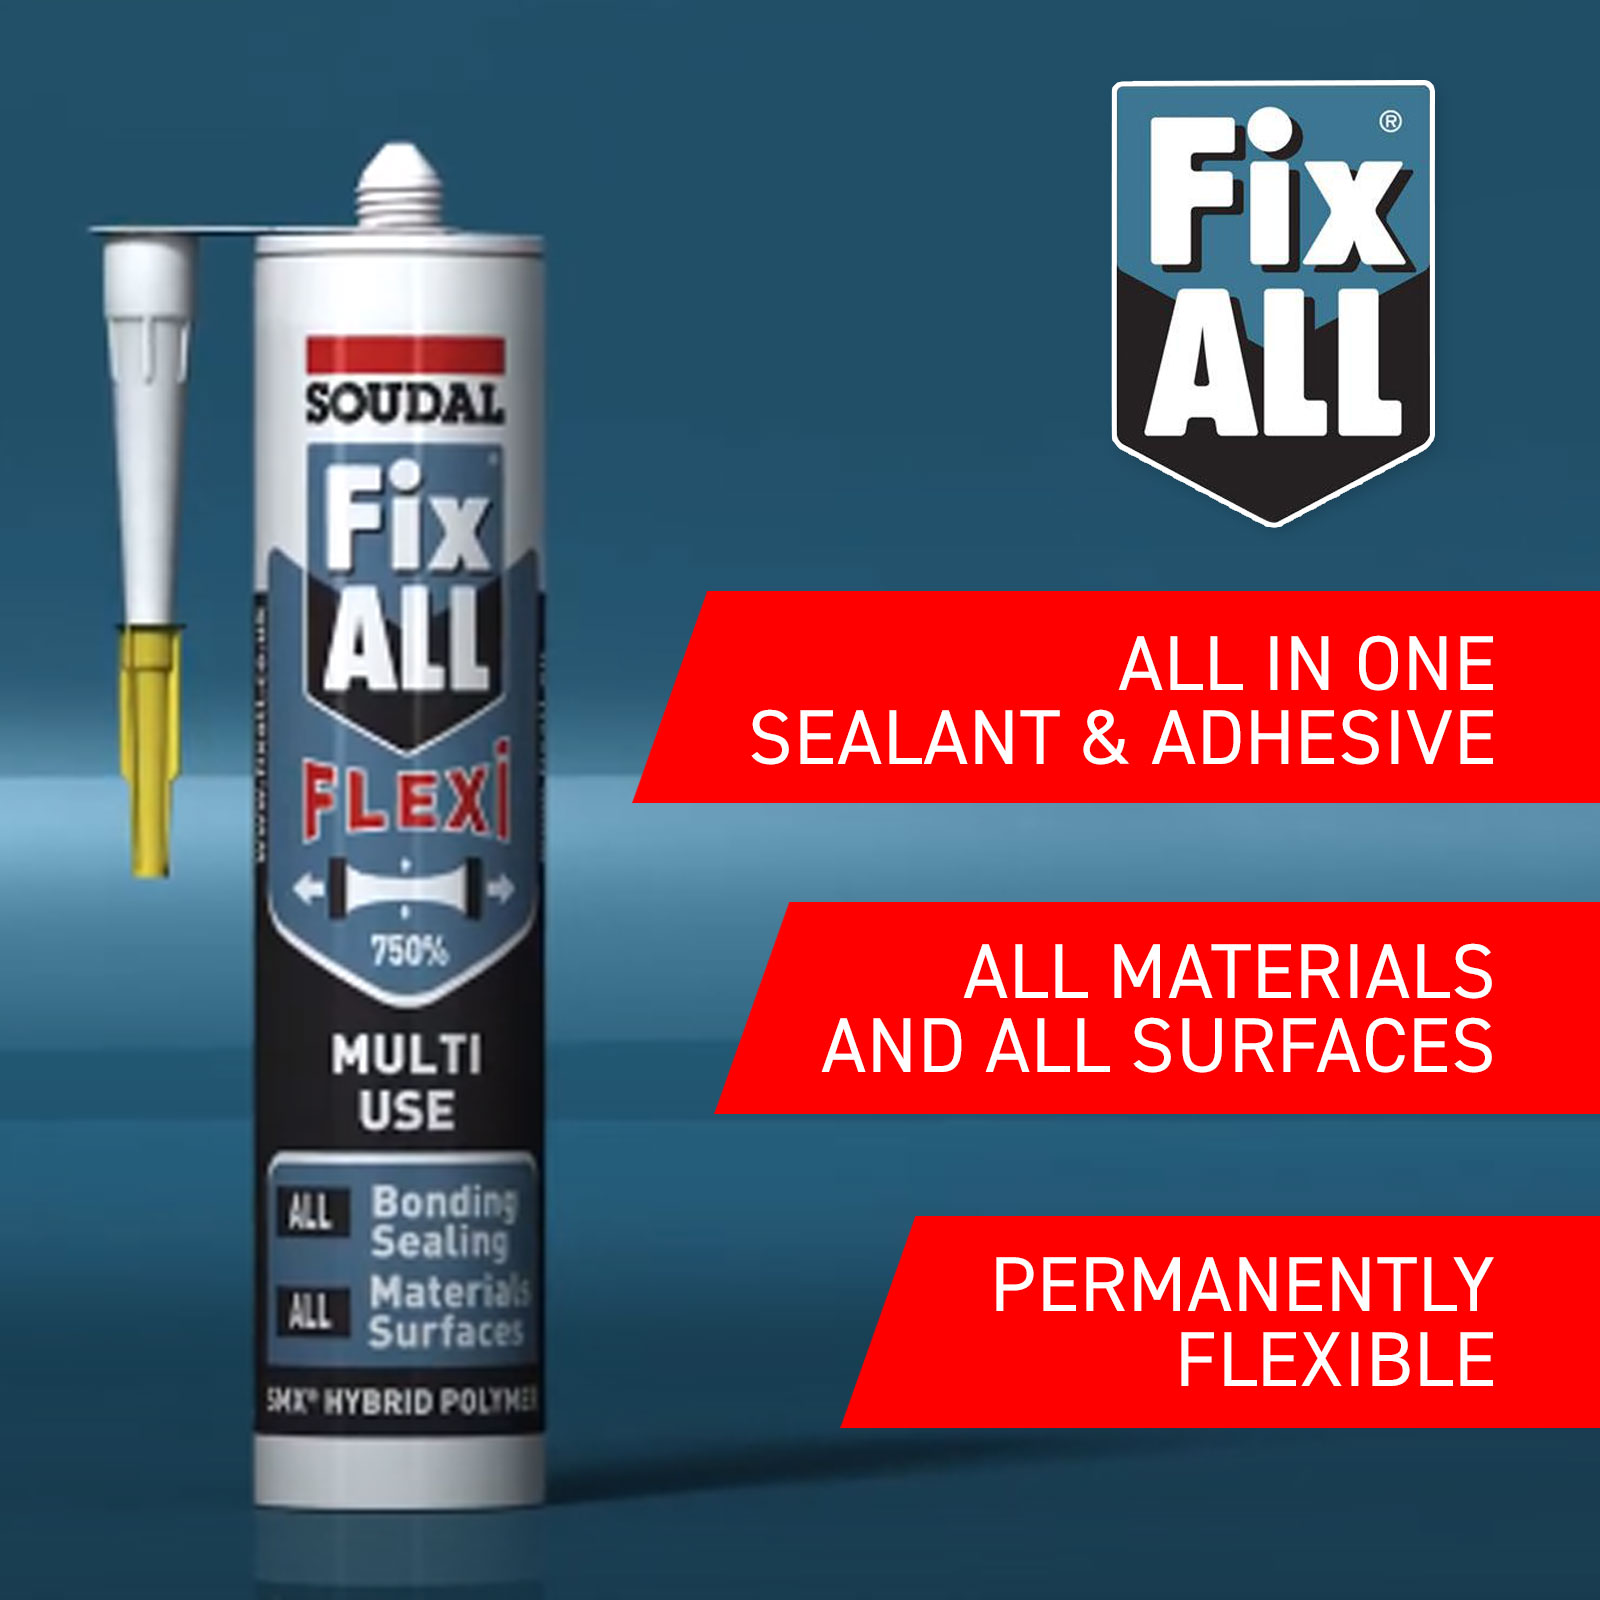 Soudal Fix ALL FLEXI CRYSTAL SUPER CLEAR Food Safe Sealant Adhesive